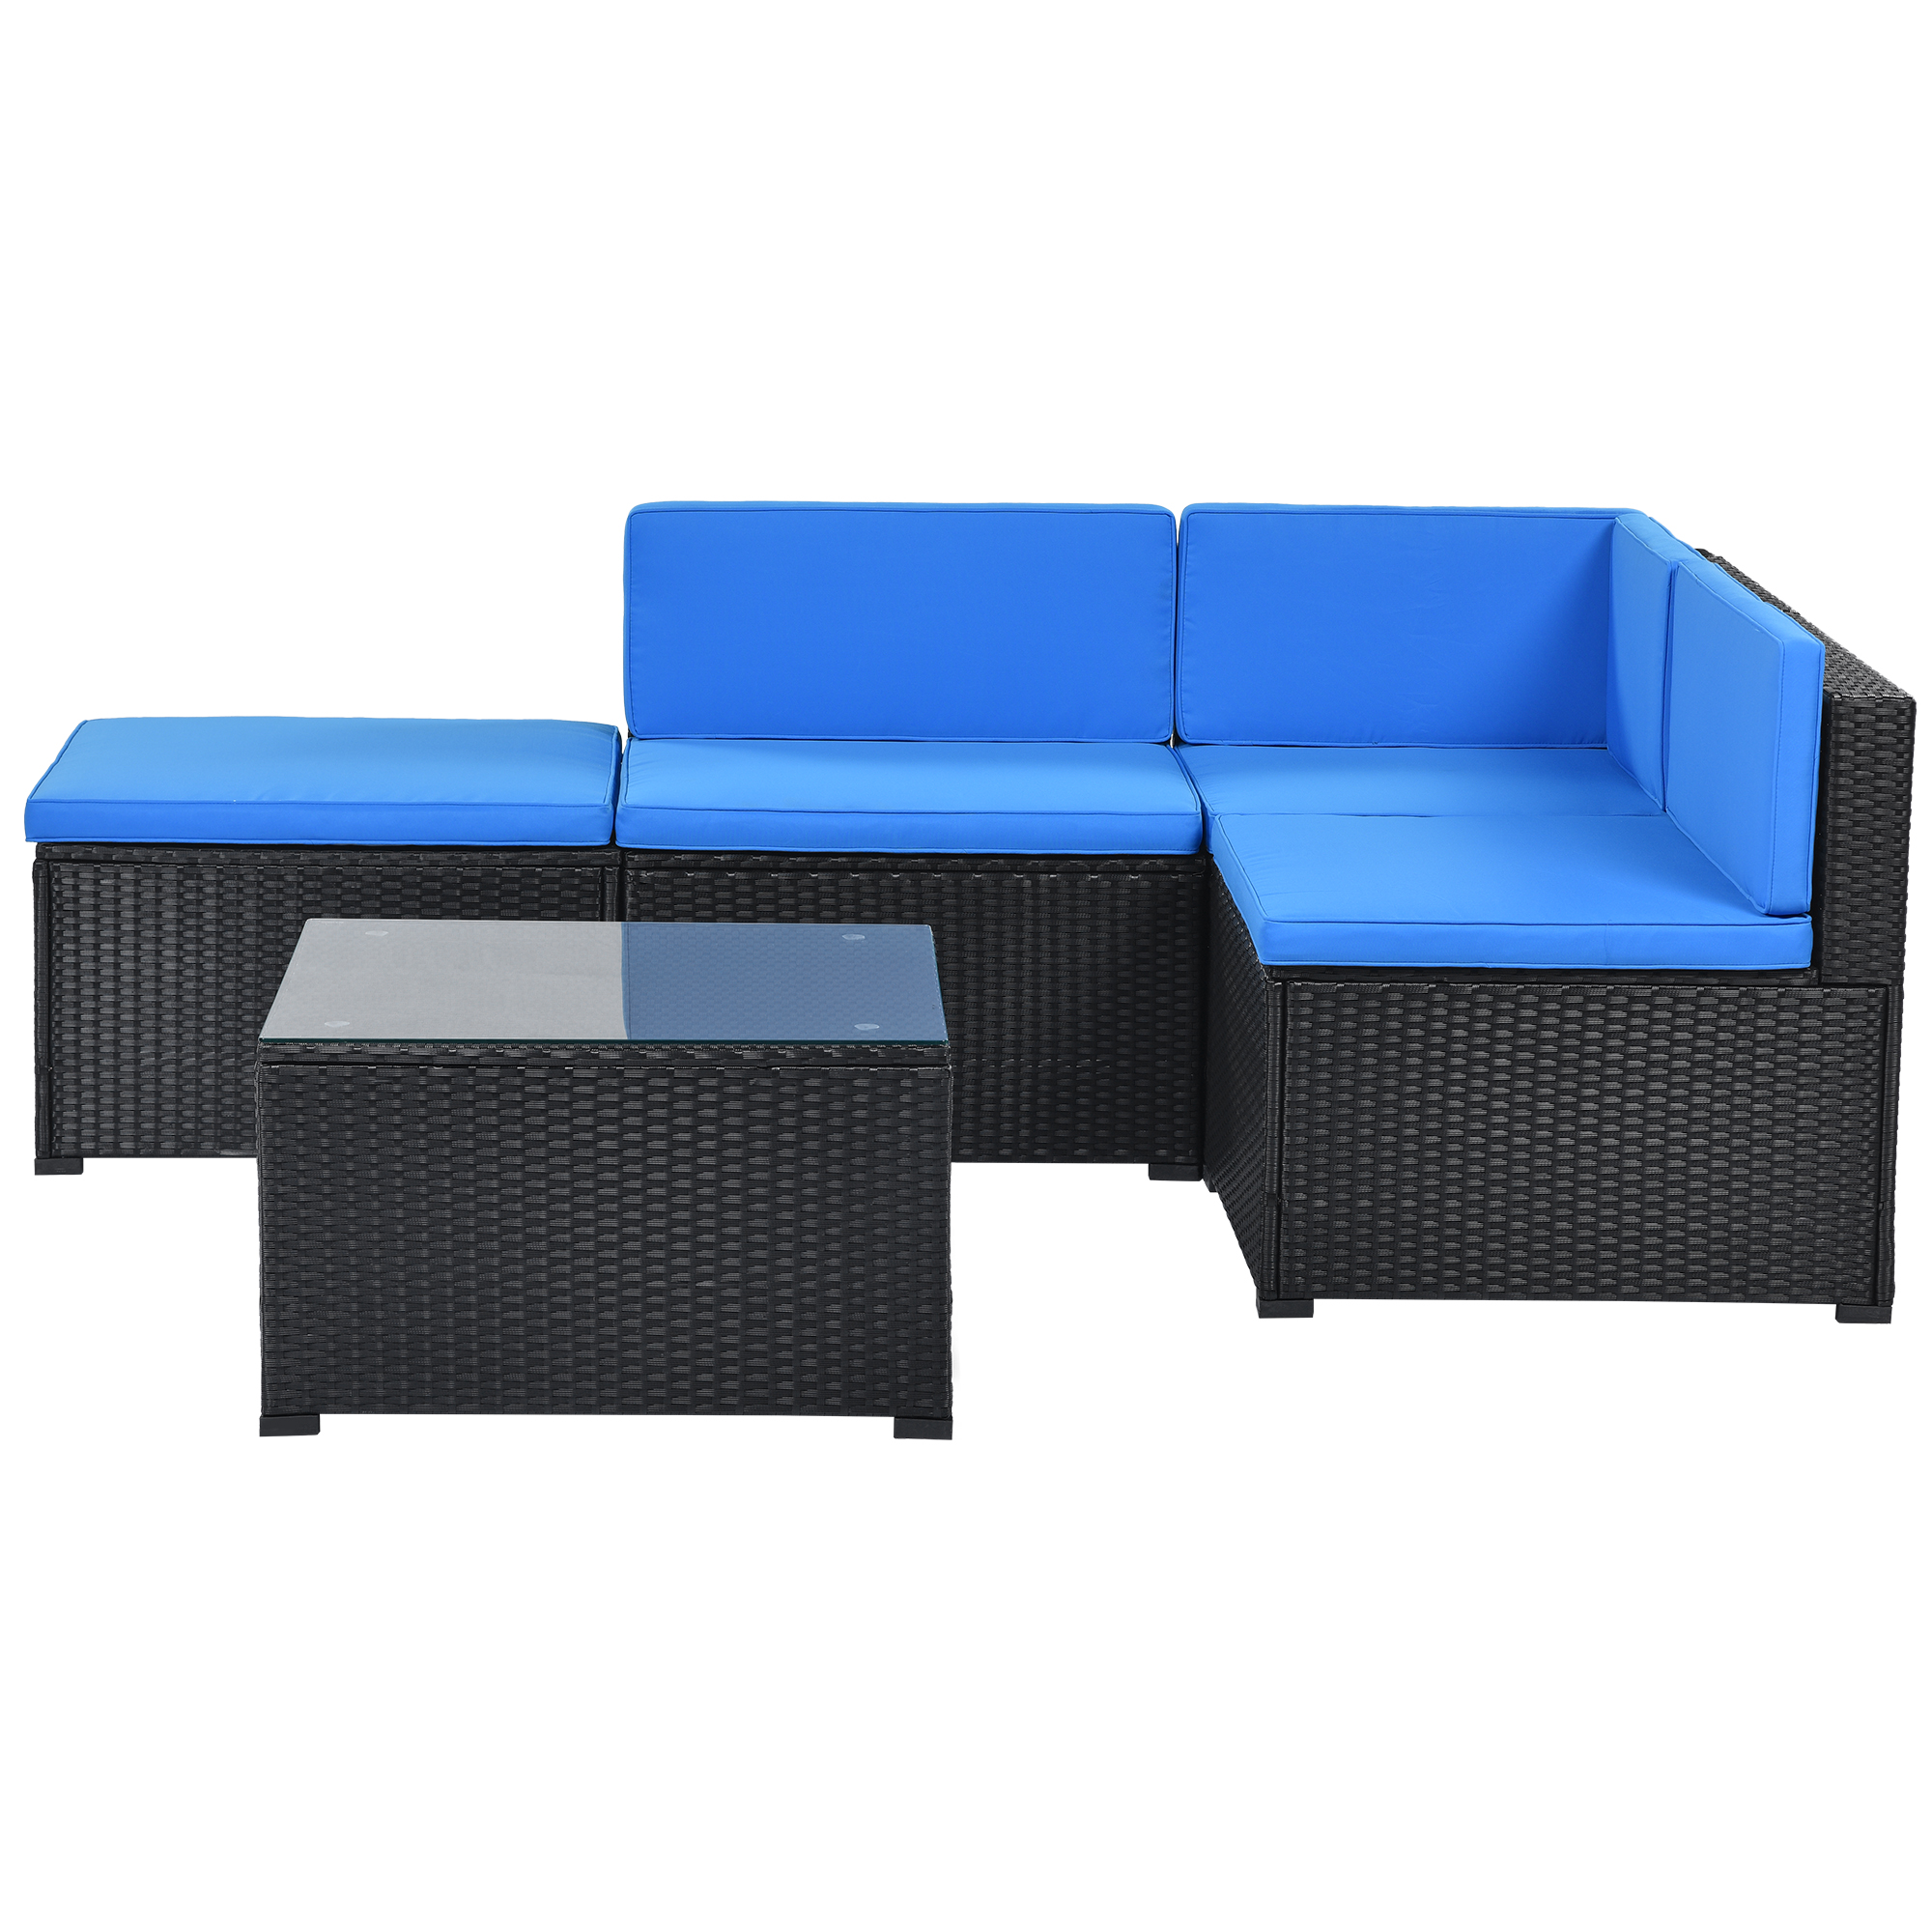 Casainc 5-Piece Patio Rattan PE Wicker Furniture Corner Sofa Set, with 2 Sofa chairs, 1 Corner chair, 1 ottoman and 1 glass coffee table, Sectional Sofa Chair, Seating, Lying(Black Wicker, Blue Cushion)-CASAINC